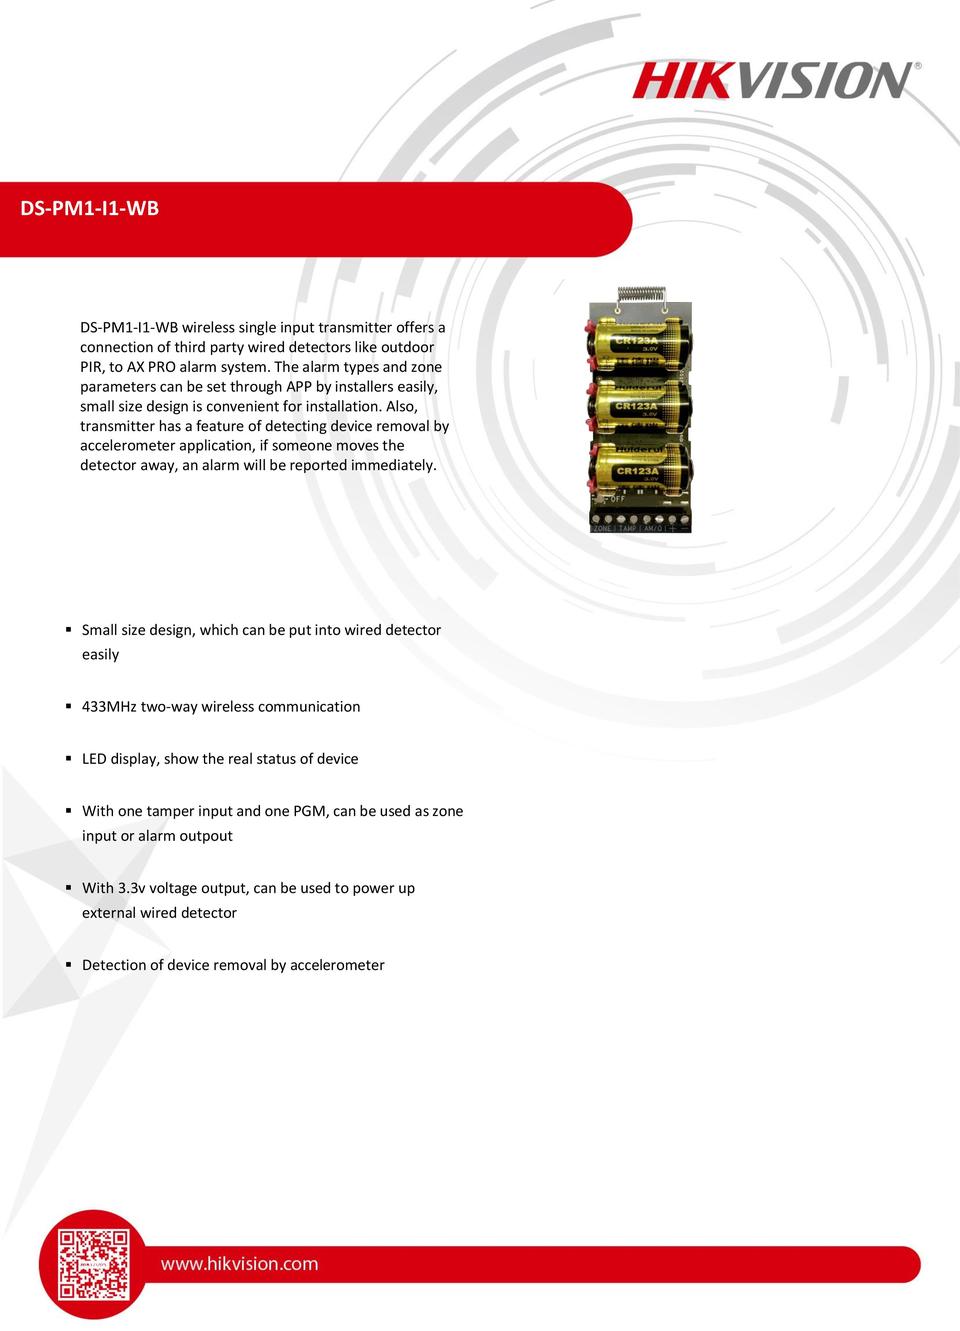 Hikvision DS-PM1-I1-WB Ax Pro Wireless Single Input Transmitter 0